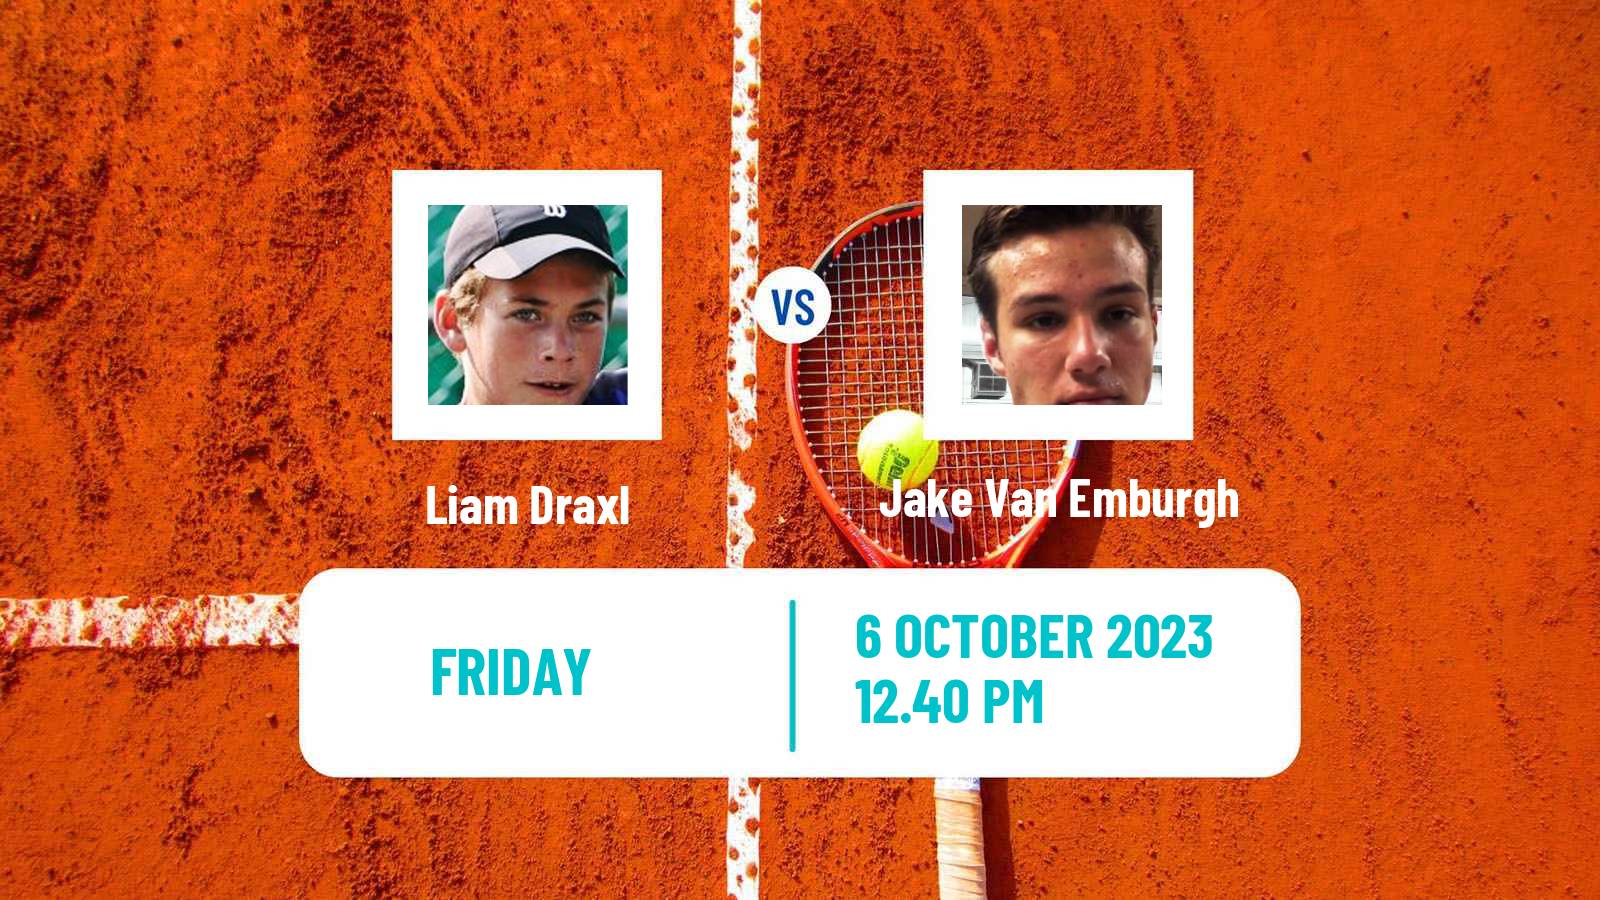 Tennis ITF M15 Ithaca Ny 2 Men Liam Draxl - Jake Van Emburgh